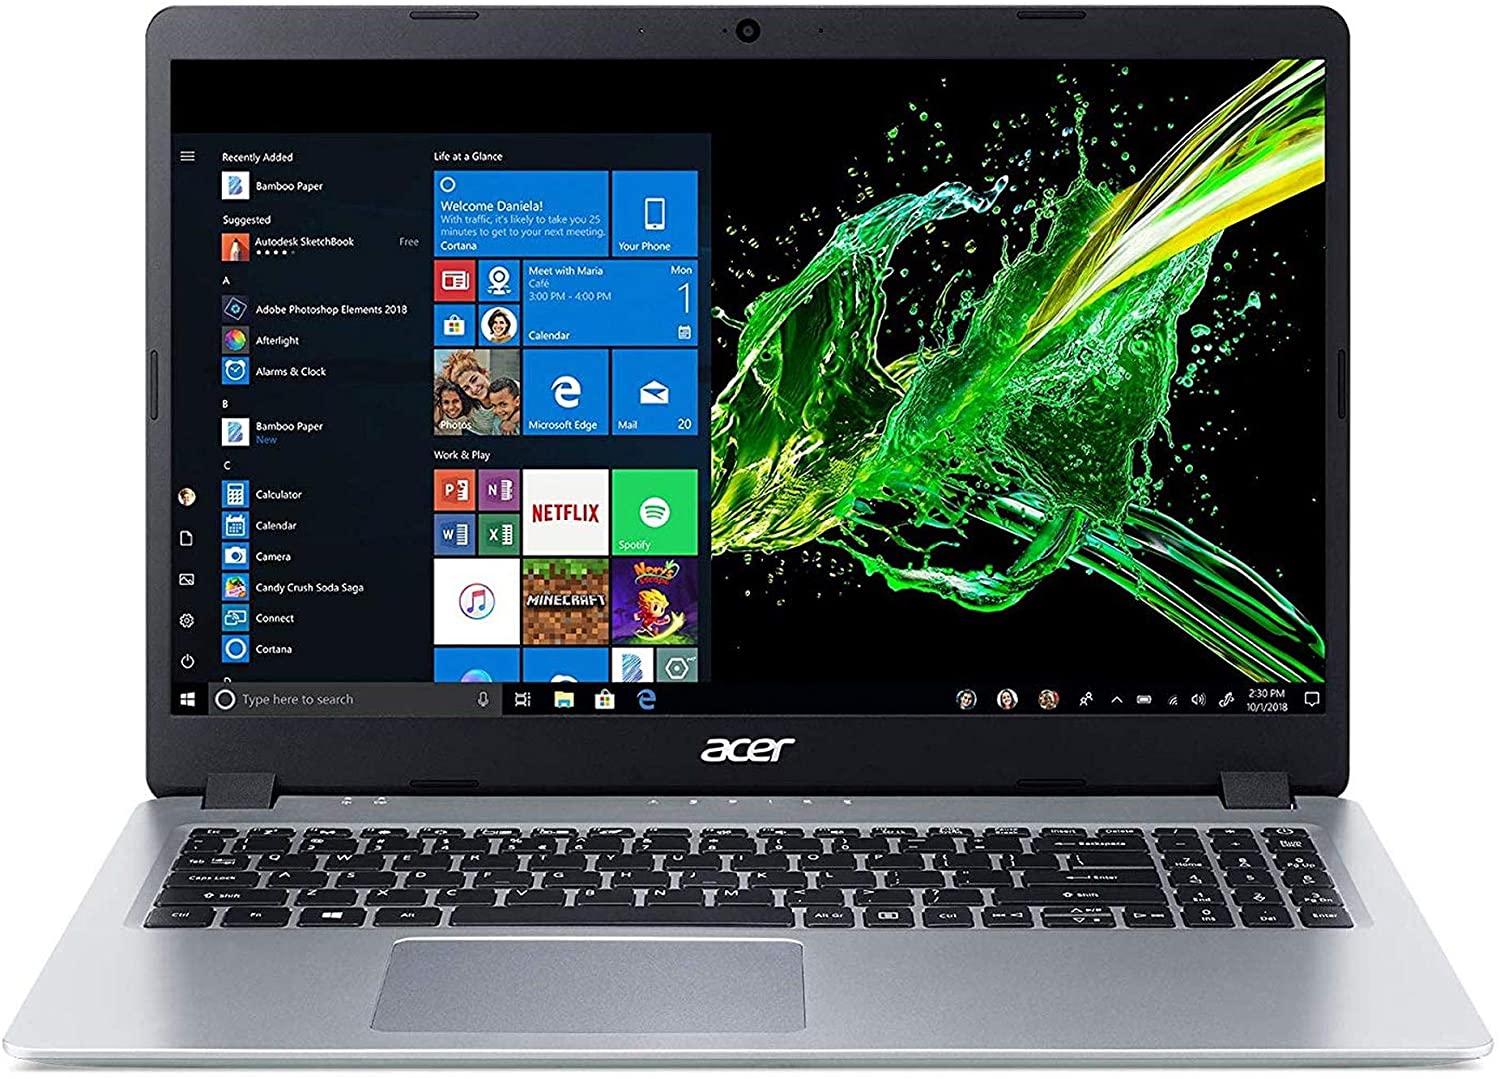 Acer Aspire 5 15.6" FHD Laptop Computer, AMD Ryzen 3 3200U Up to 3.5GHz (Beats i5-7200U), 4GB DDR4 RAM, 128GB PCIe SSD, 802.11ac WiFi, HDMI, Backlit Keyboard, Silver, Windows 10 Home in S Mode - image 3 of 6